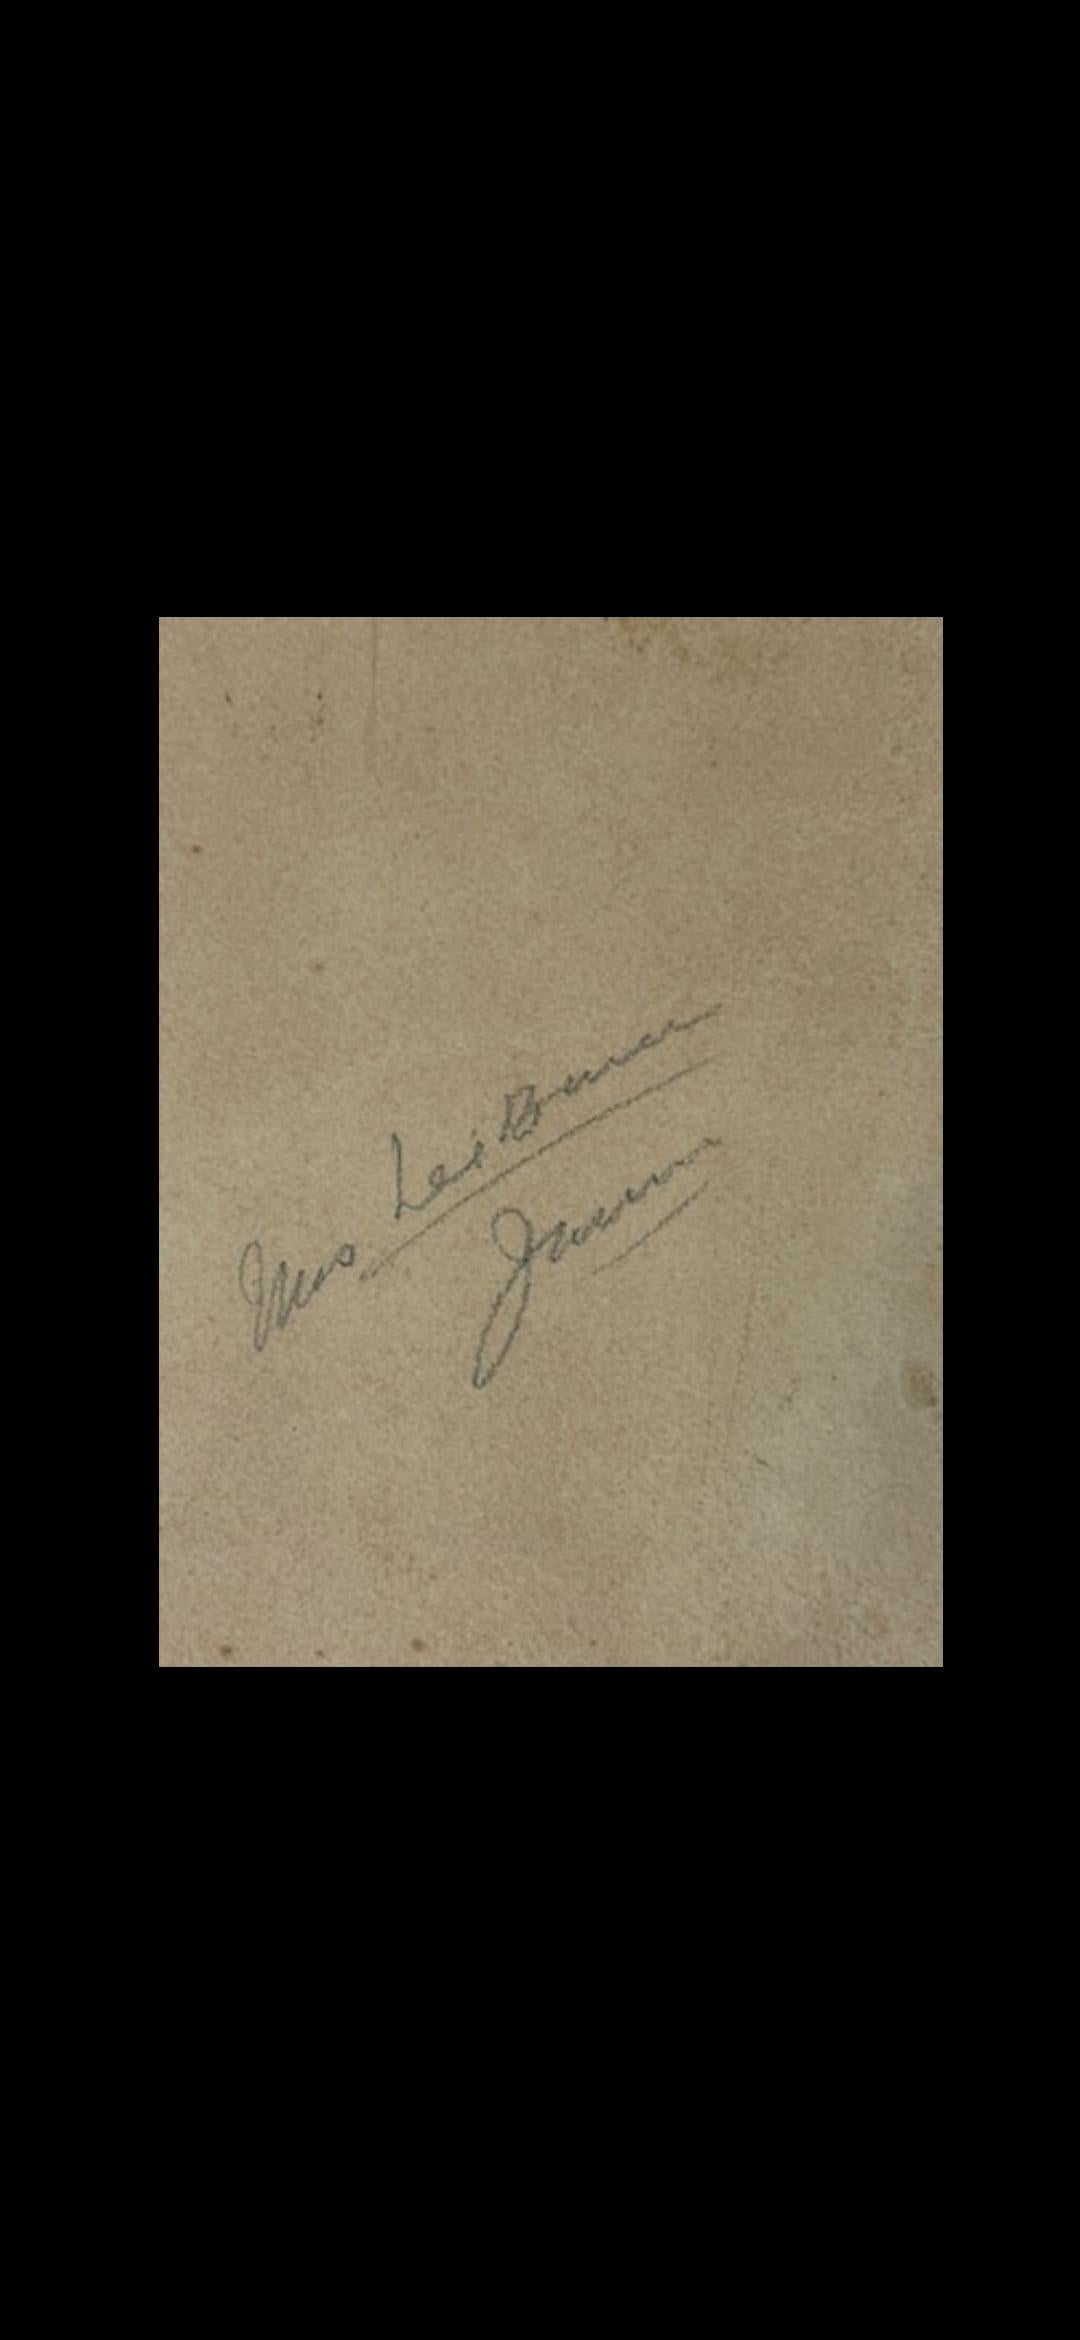 John White Alexander
Tired, circa 1910
Inscribed on the reverse: Mrs Lee Bauer, _____,
Inscribed on the reverse: 